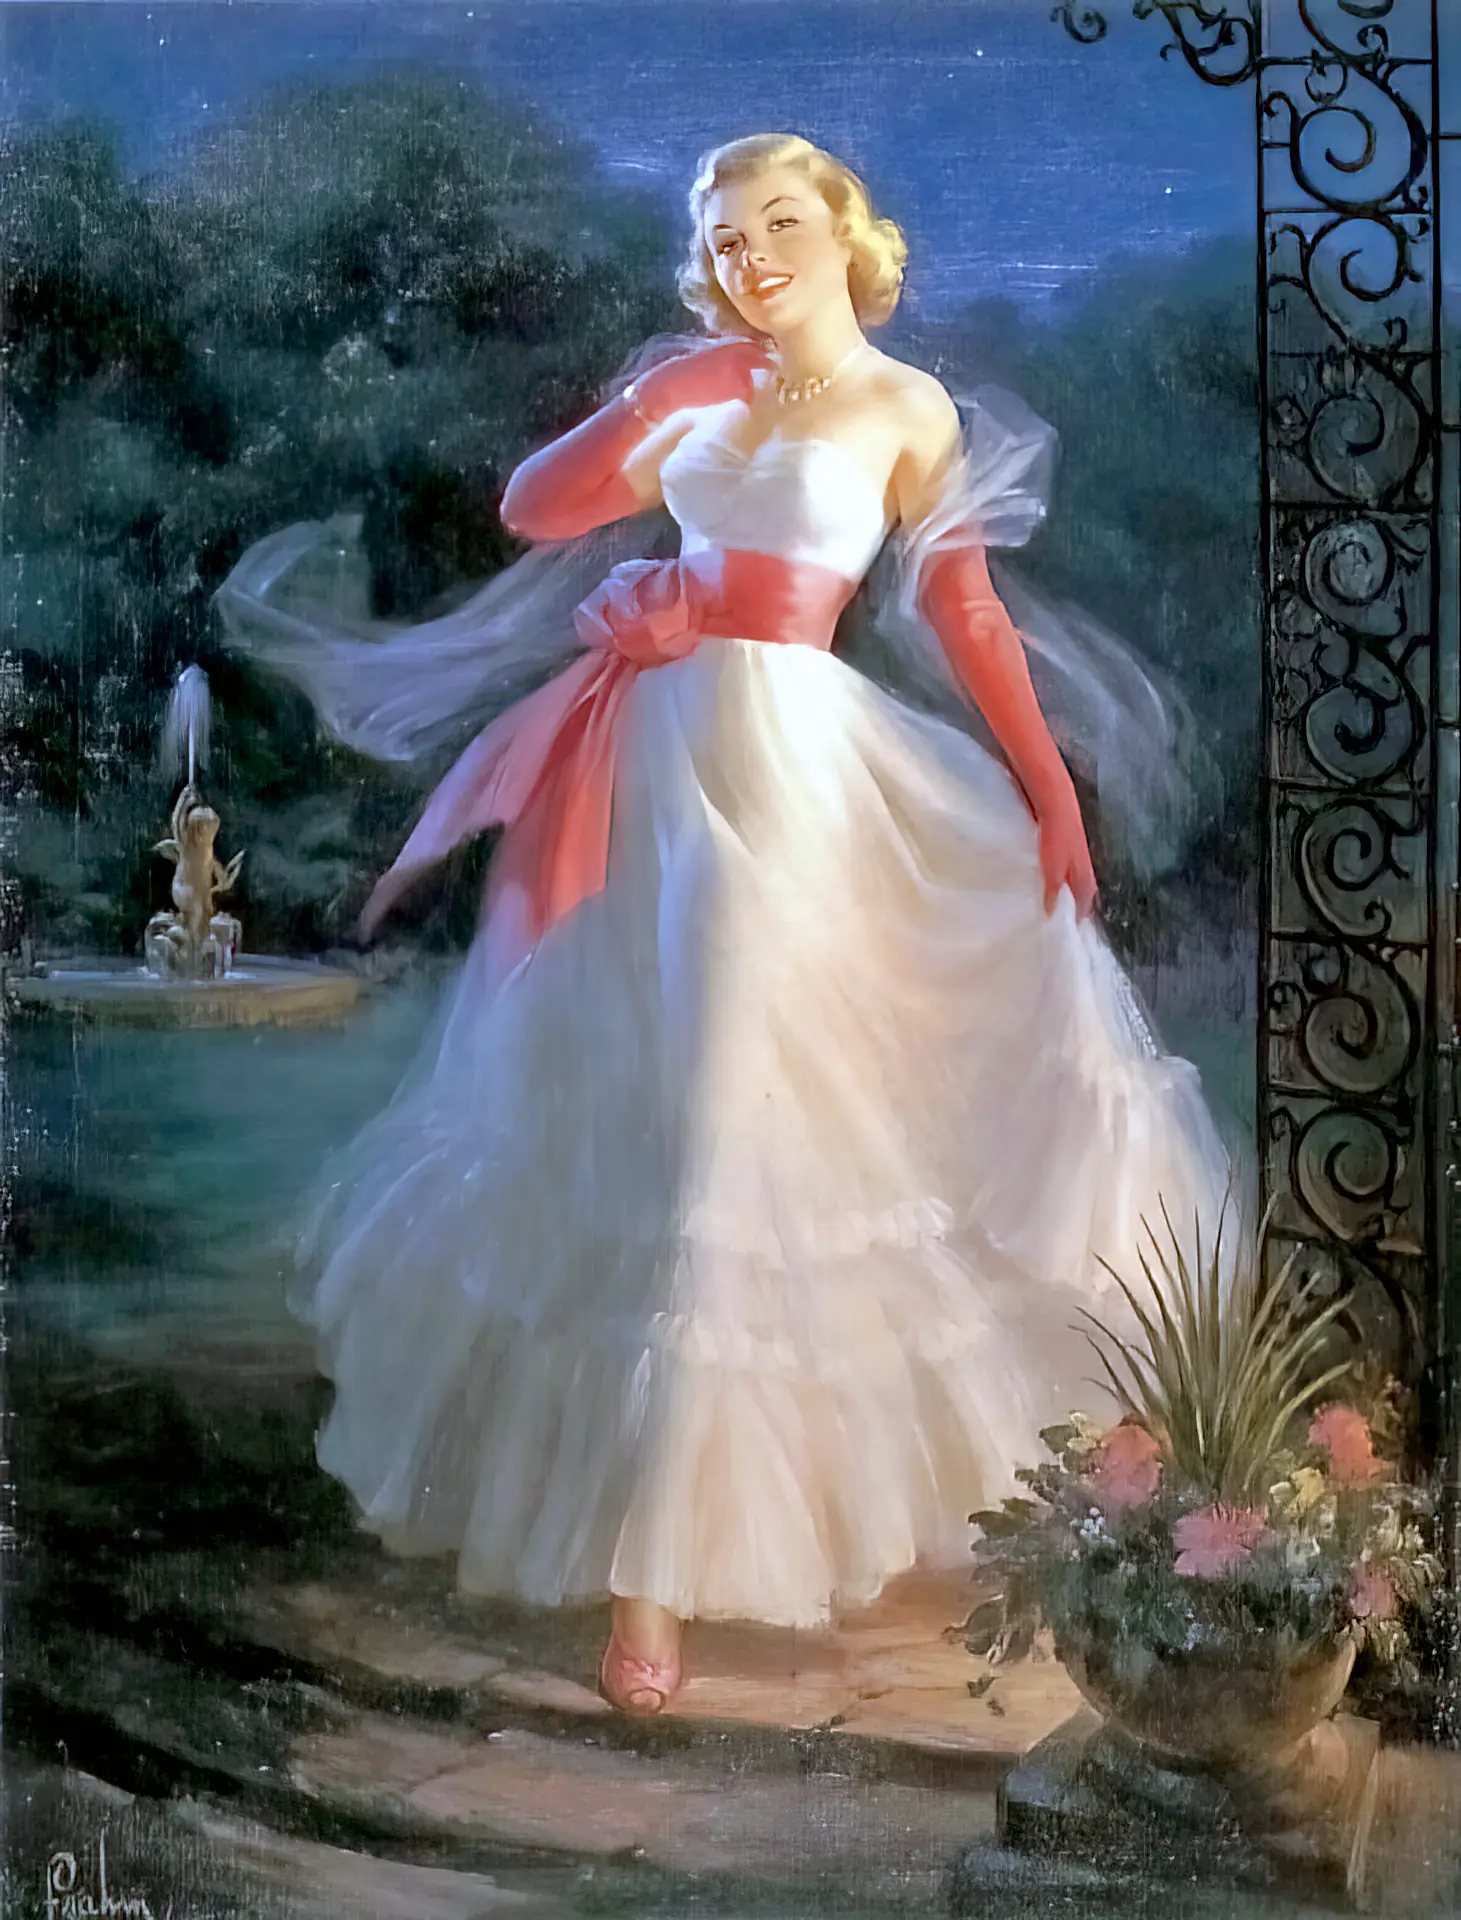 Beautiful classic blonde walks in her white dress